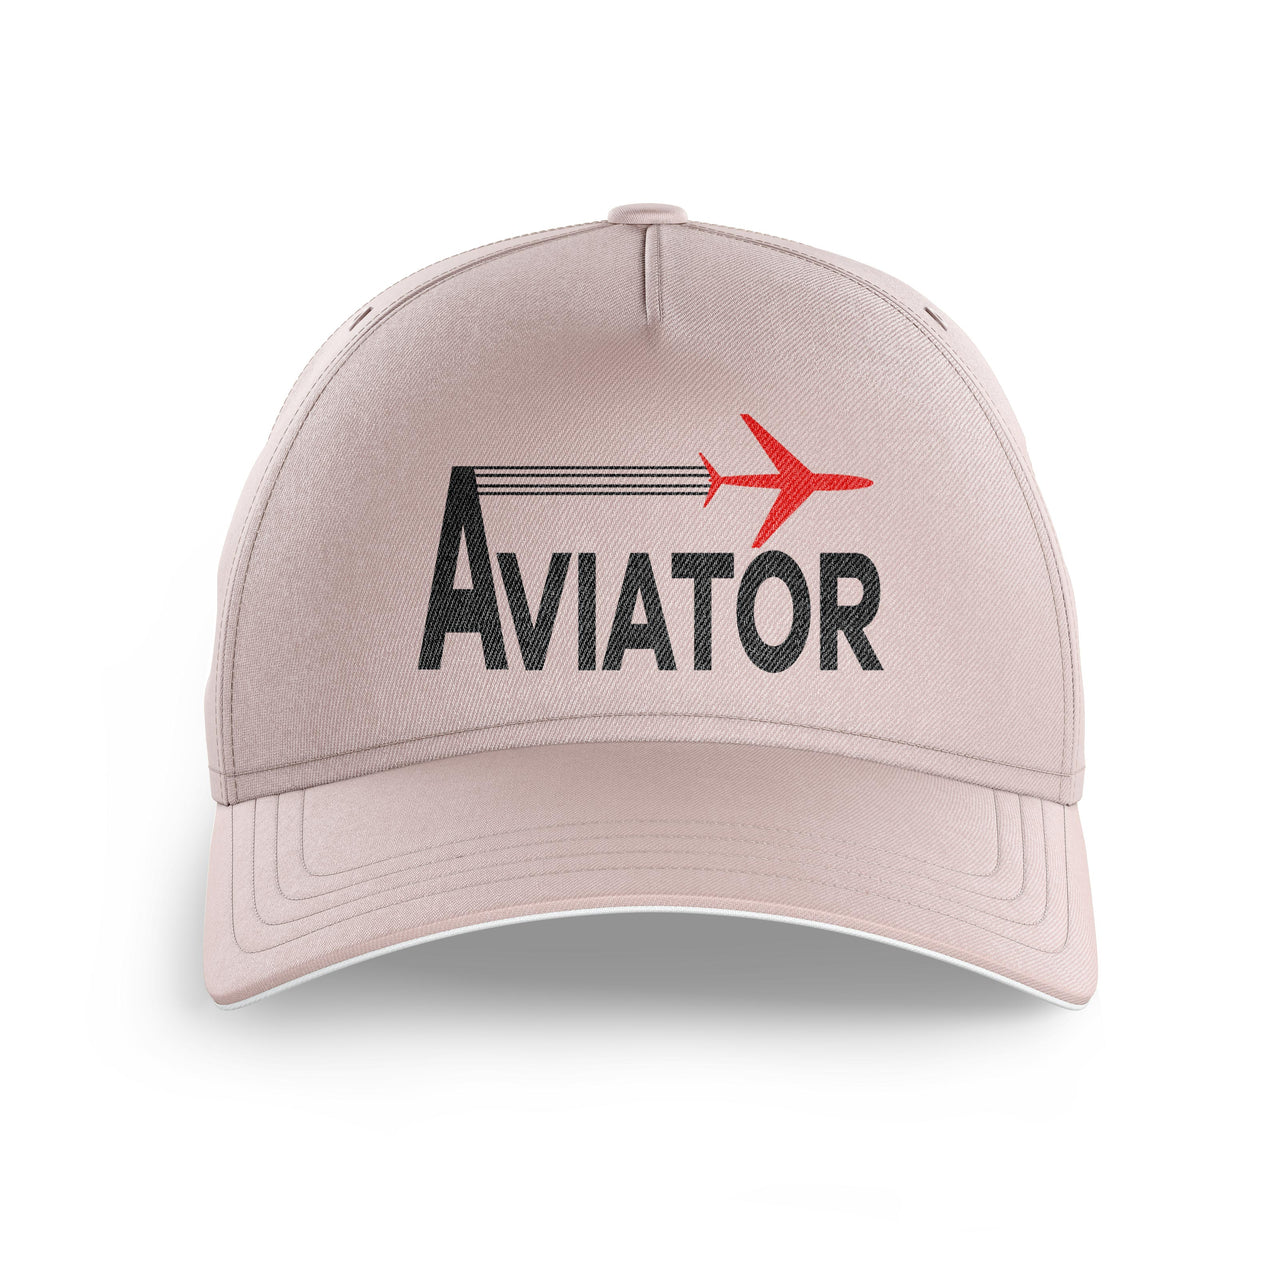 Aviator Printed Hats